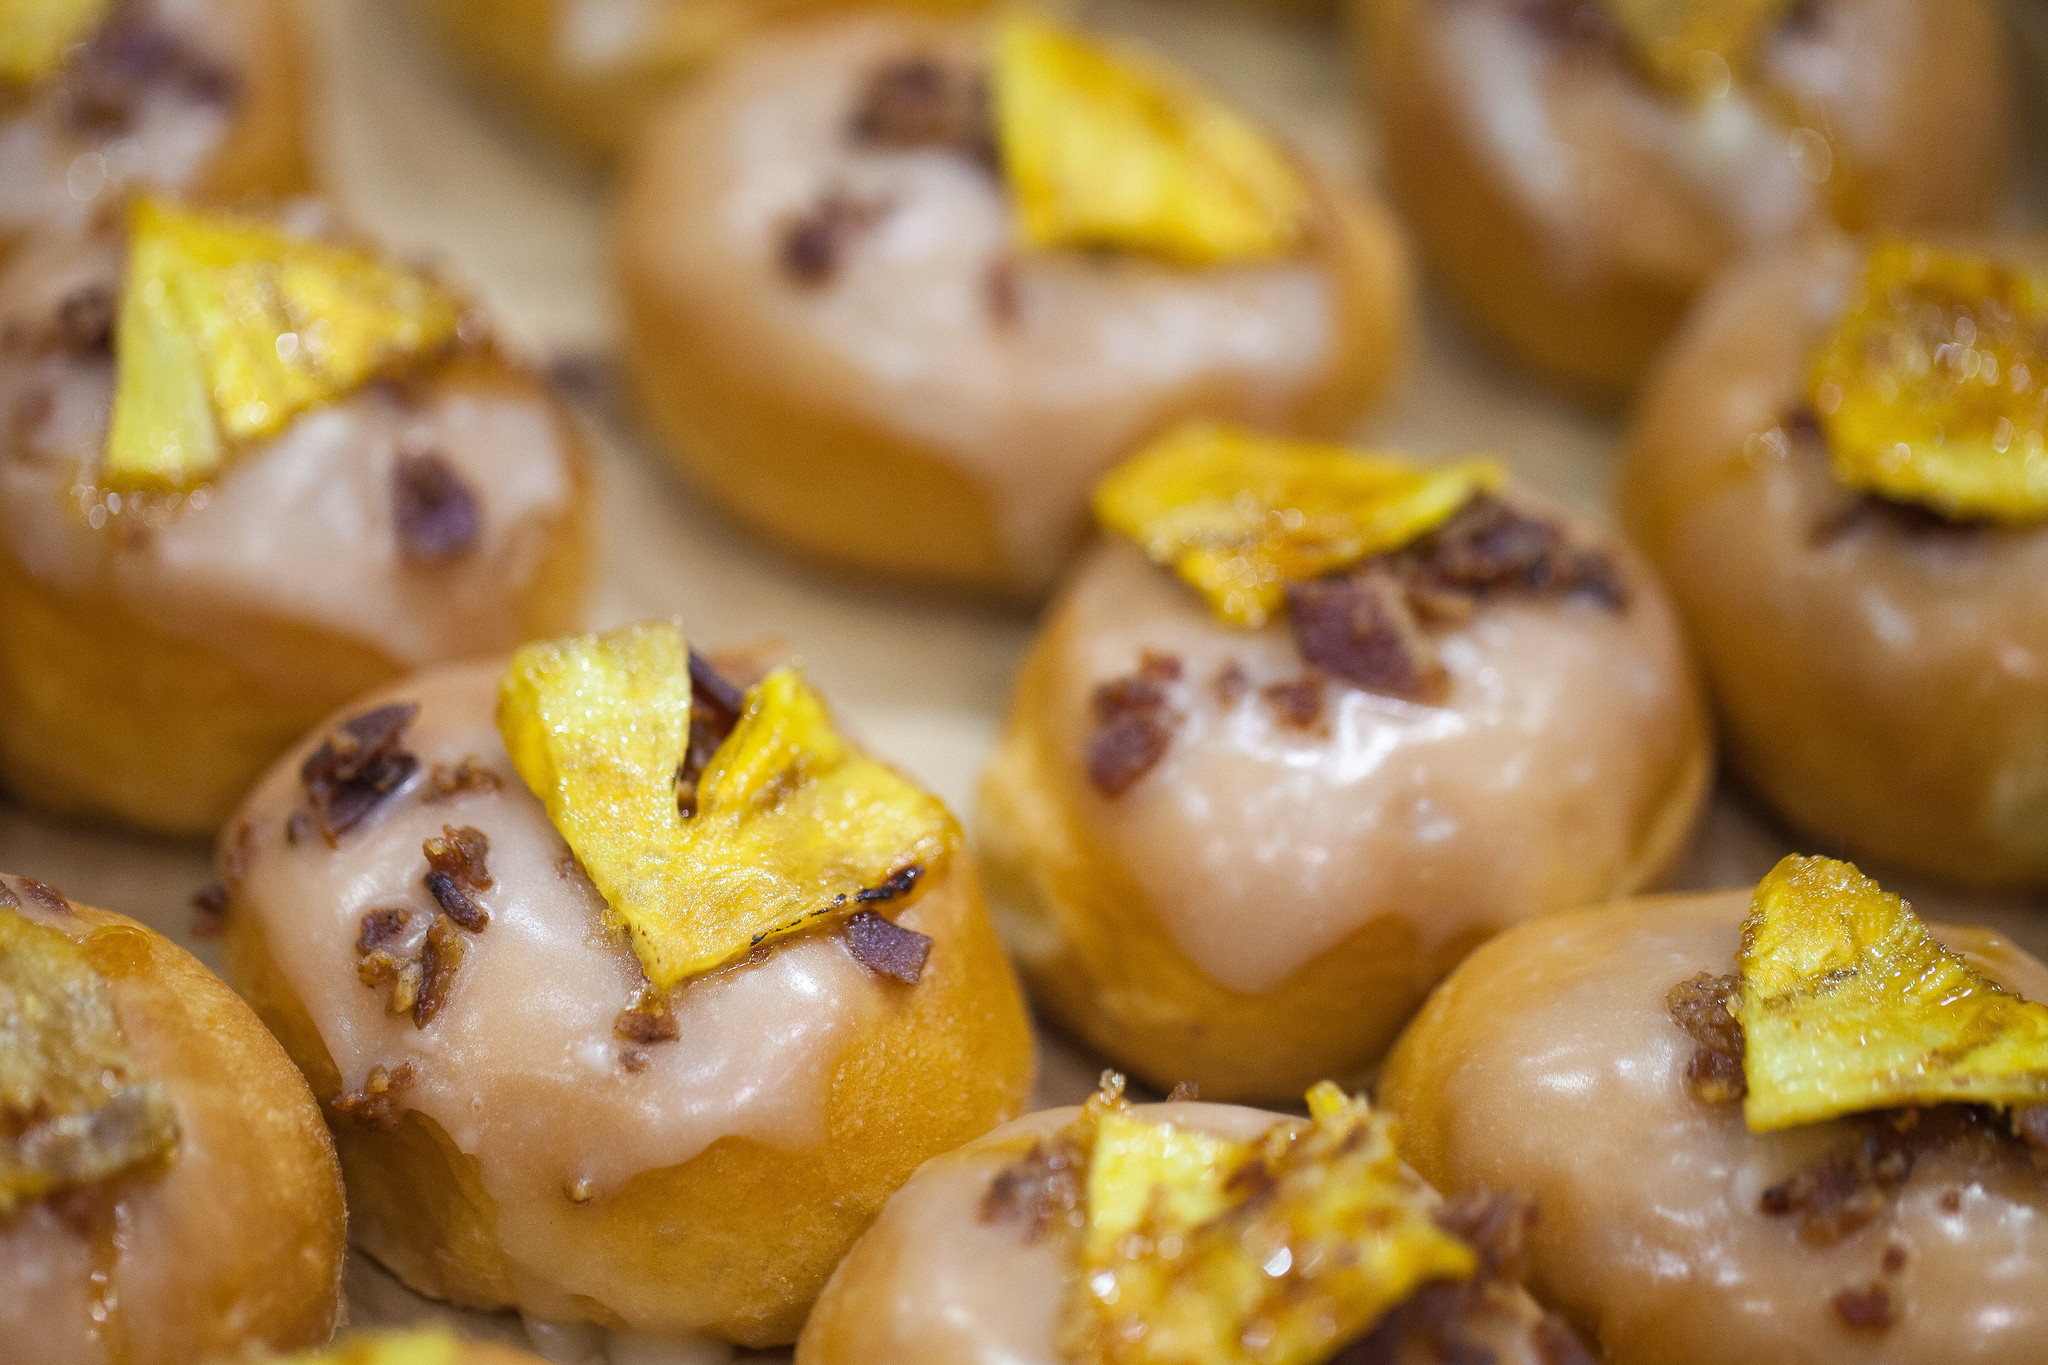 maple glazed pineapple and bacon donuts - Firecakes - Baconfest 2013.jpg